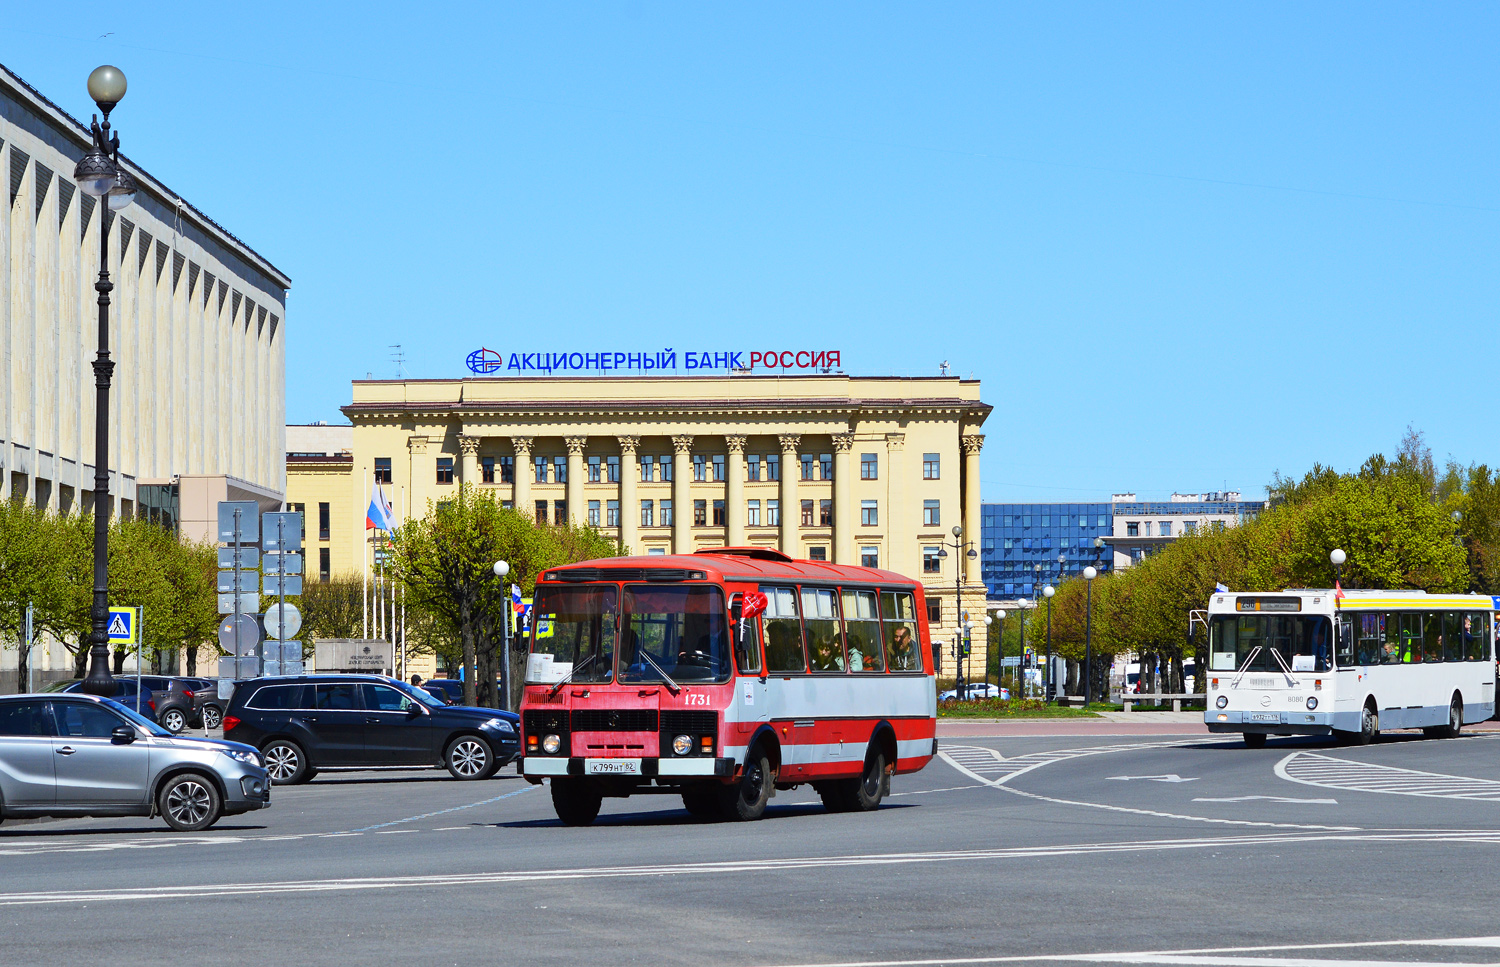 Sankt Petersburg, PAZ-3205 (00) Nr 1731; Sankt Petersburg — III International Transport Festival "SPbTransportFest-2022"